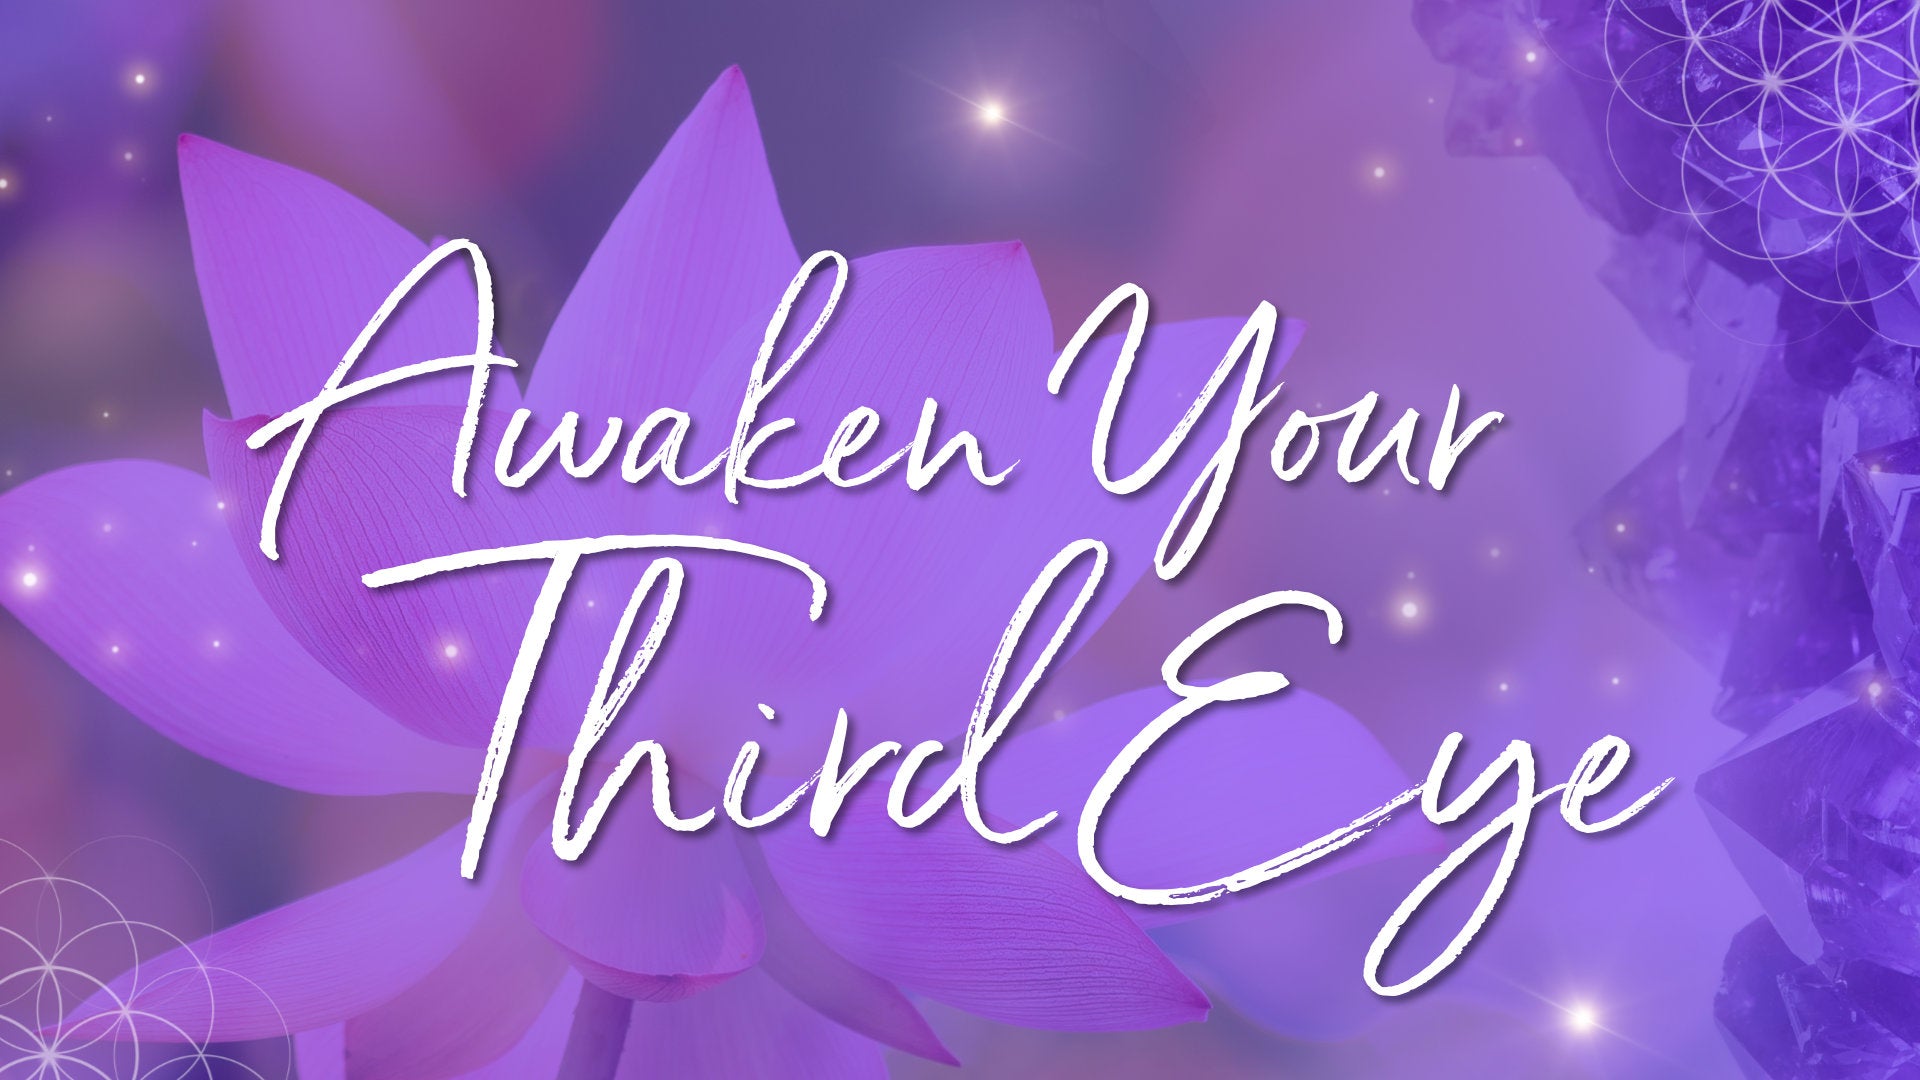 Awaken Your Third Eye Online Course